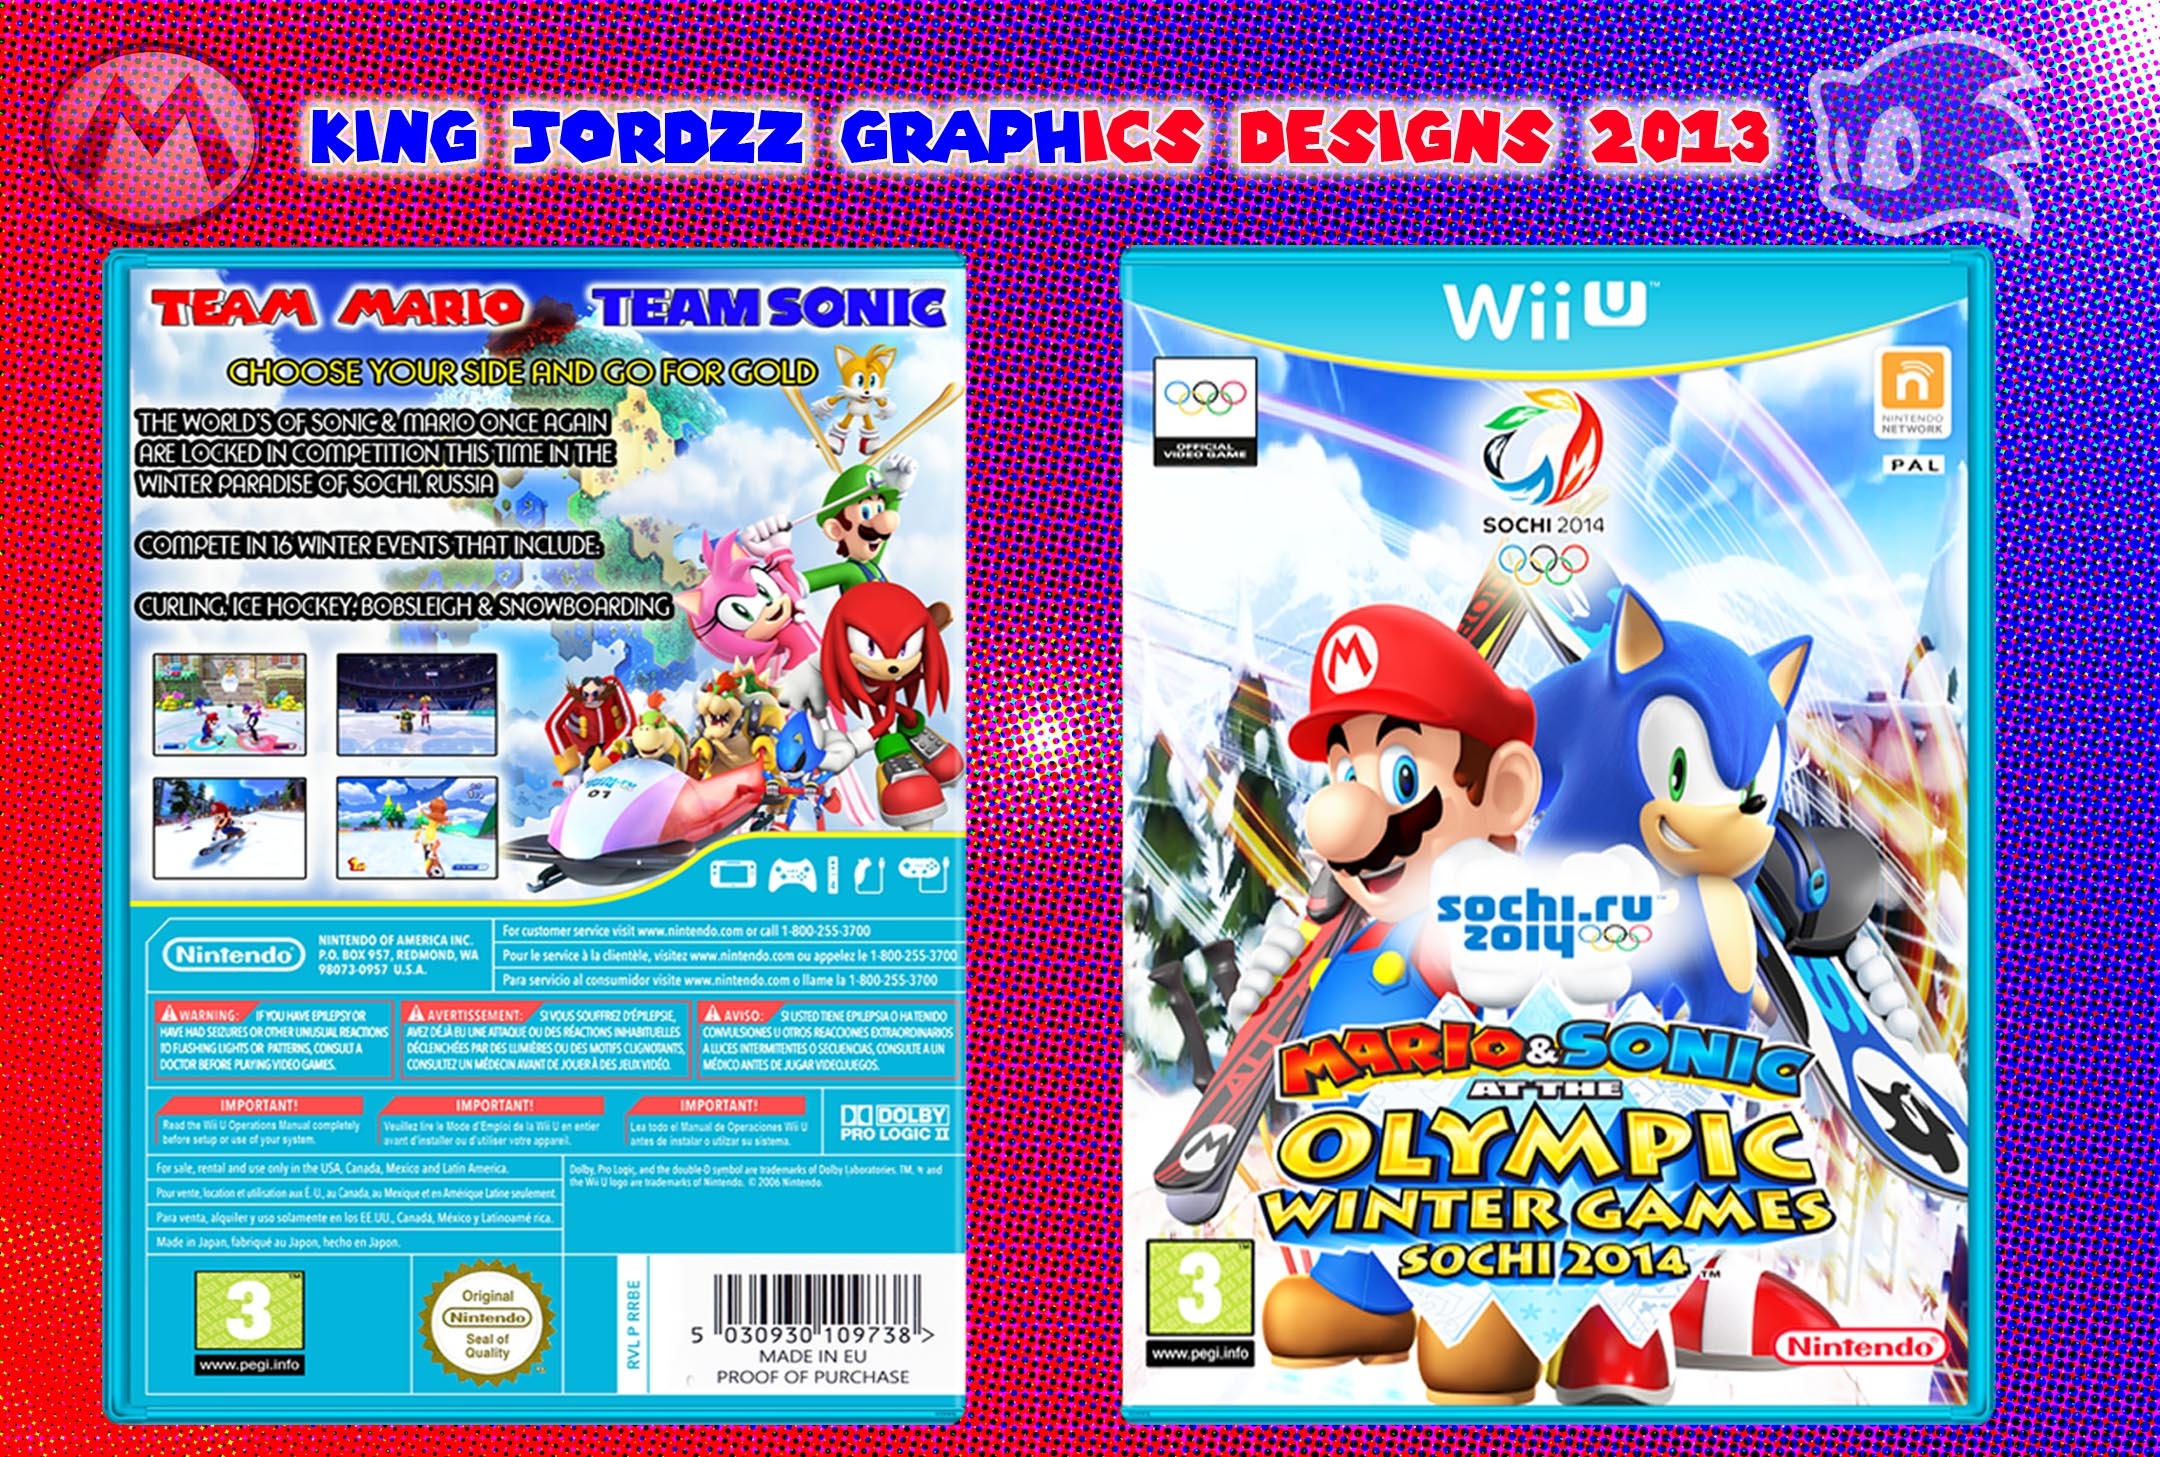 Mario & Sonic At The Winter Games 2014 Sochi box cover